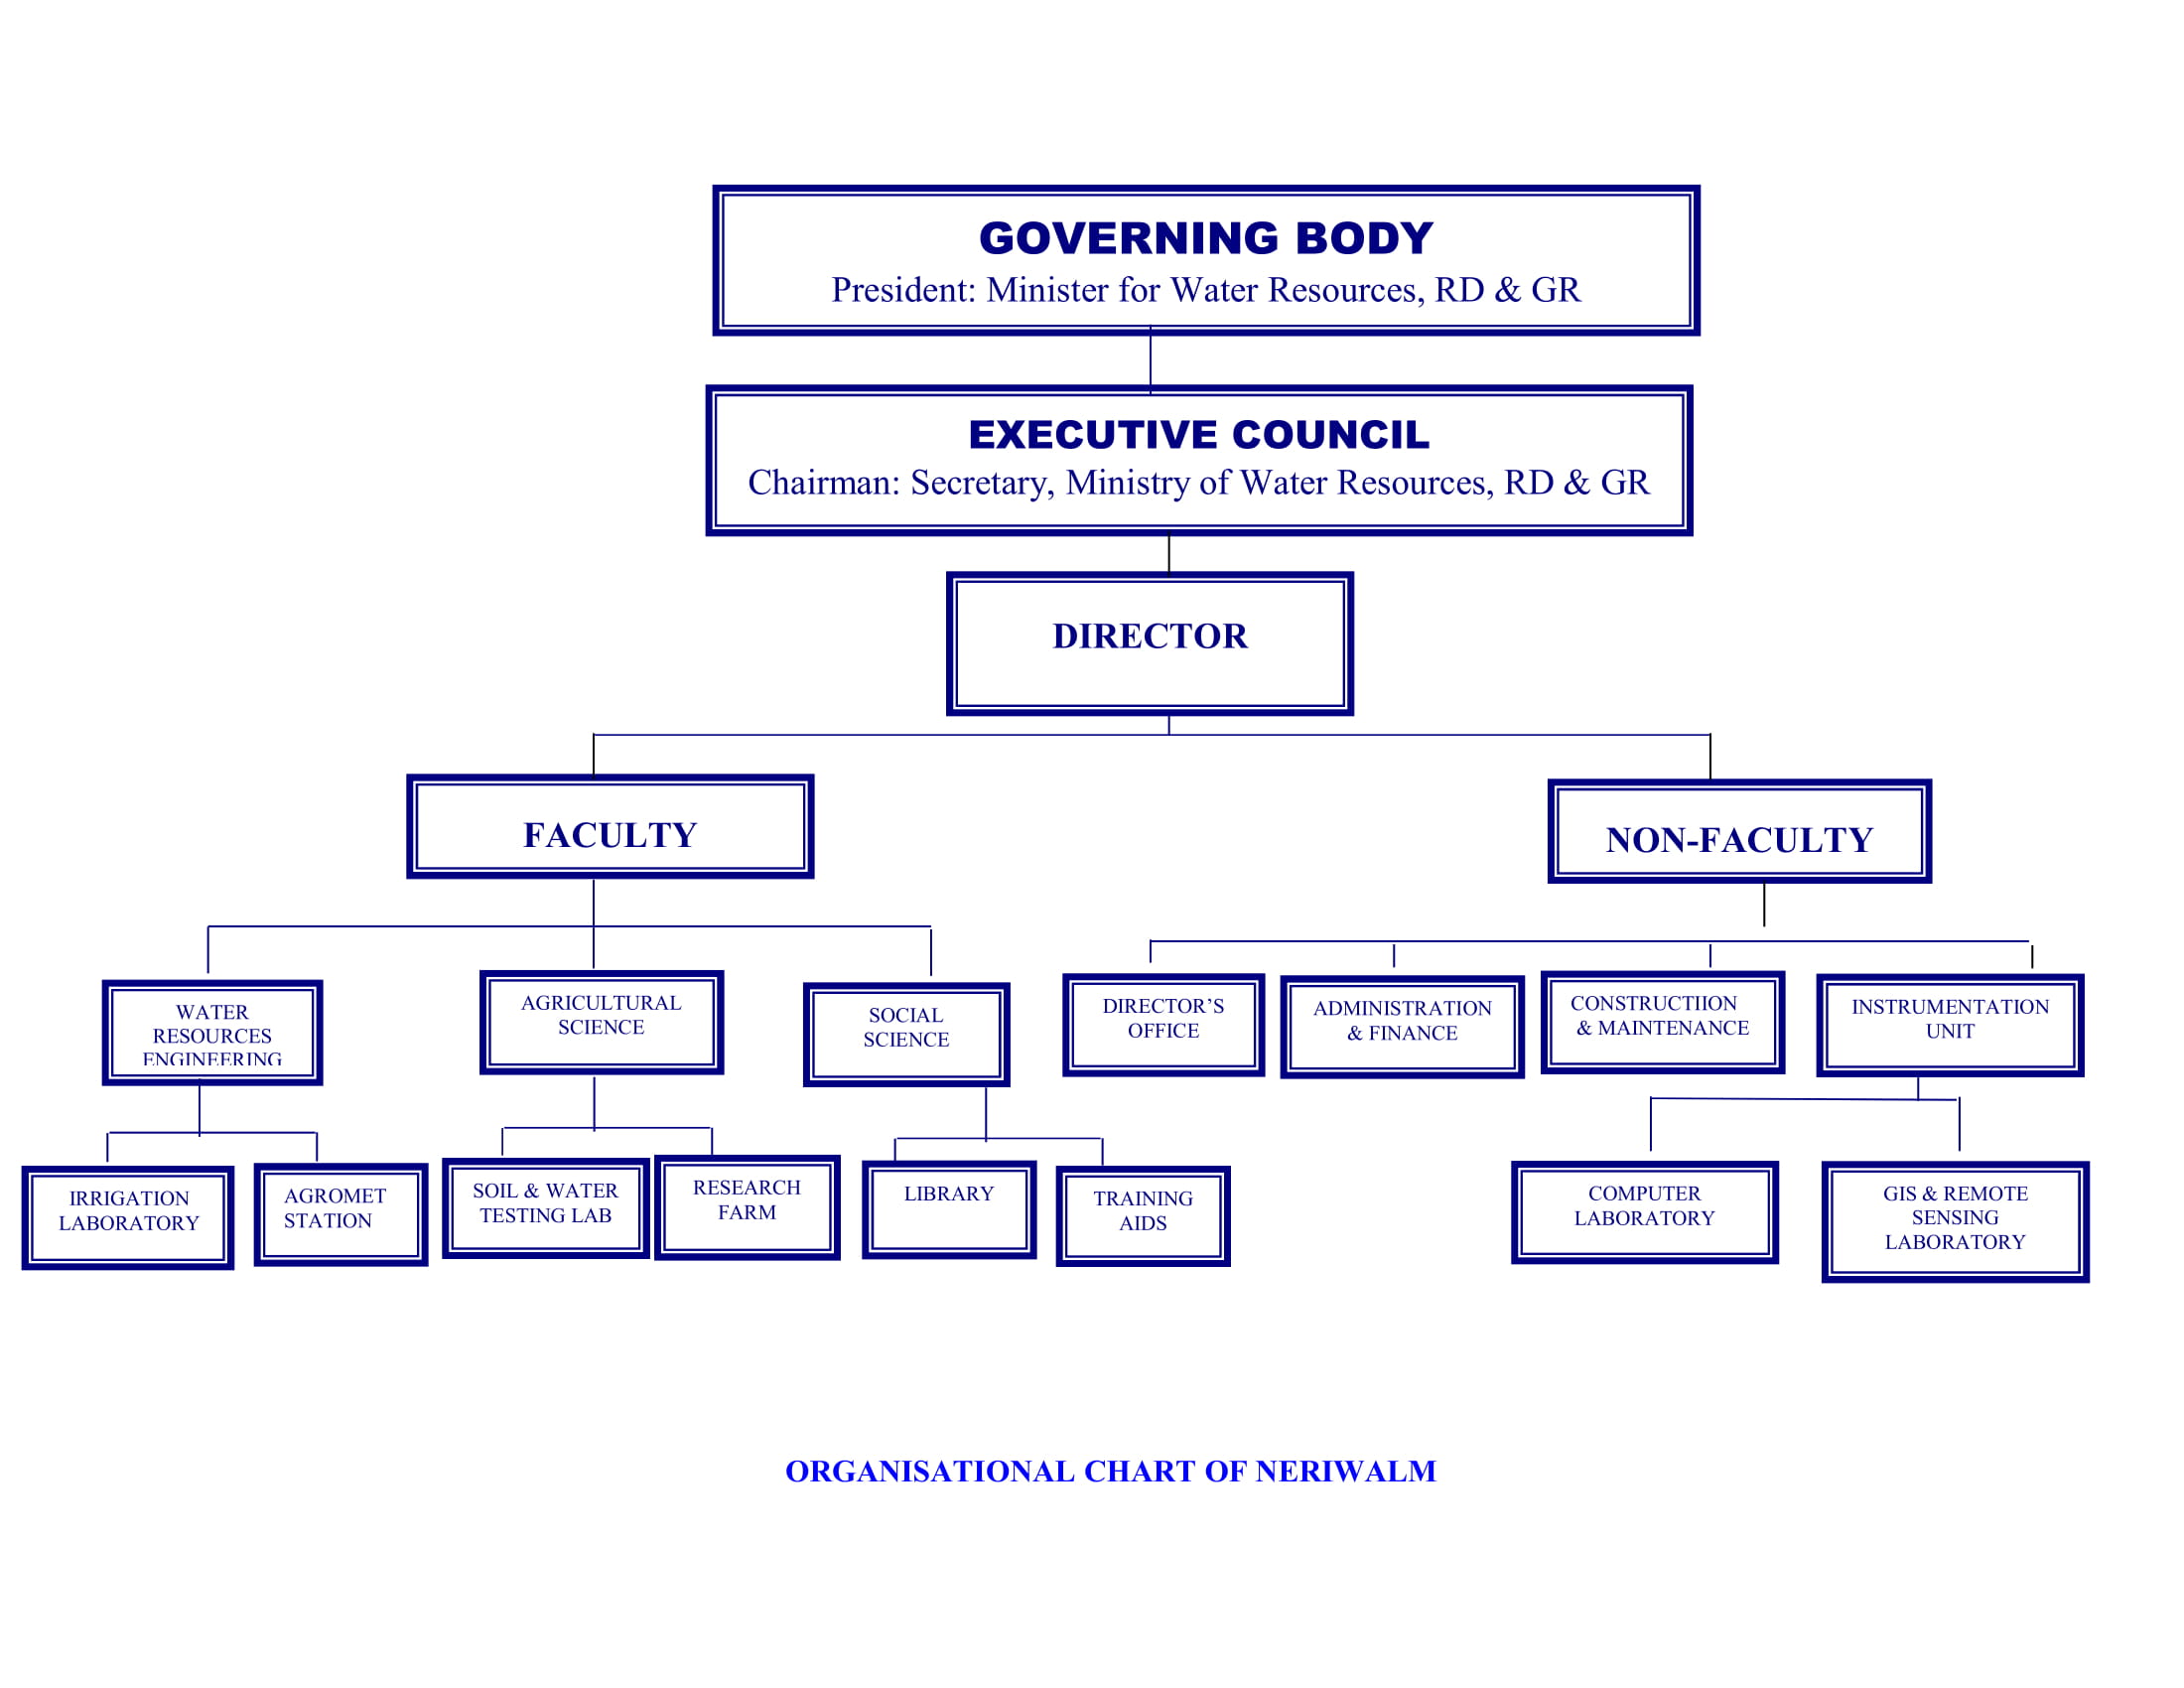 Organization Structure of NERIWALM